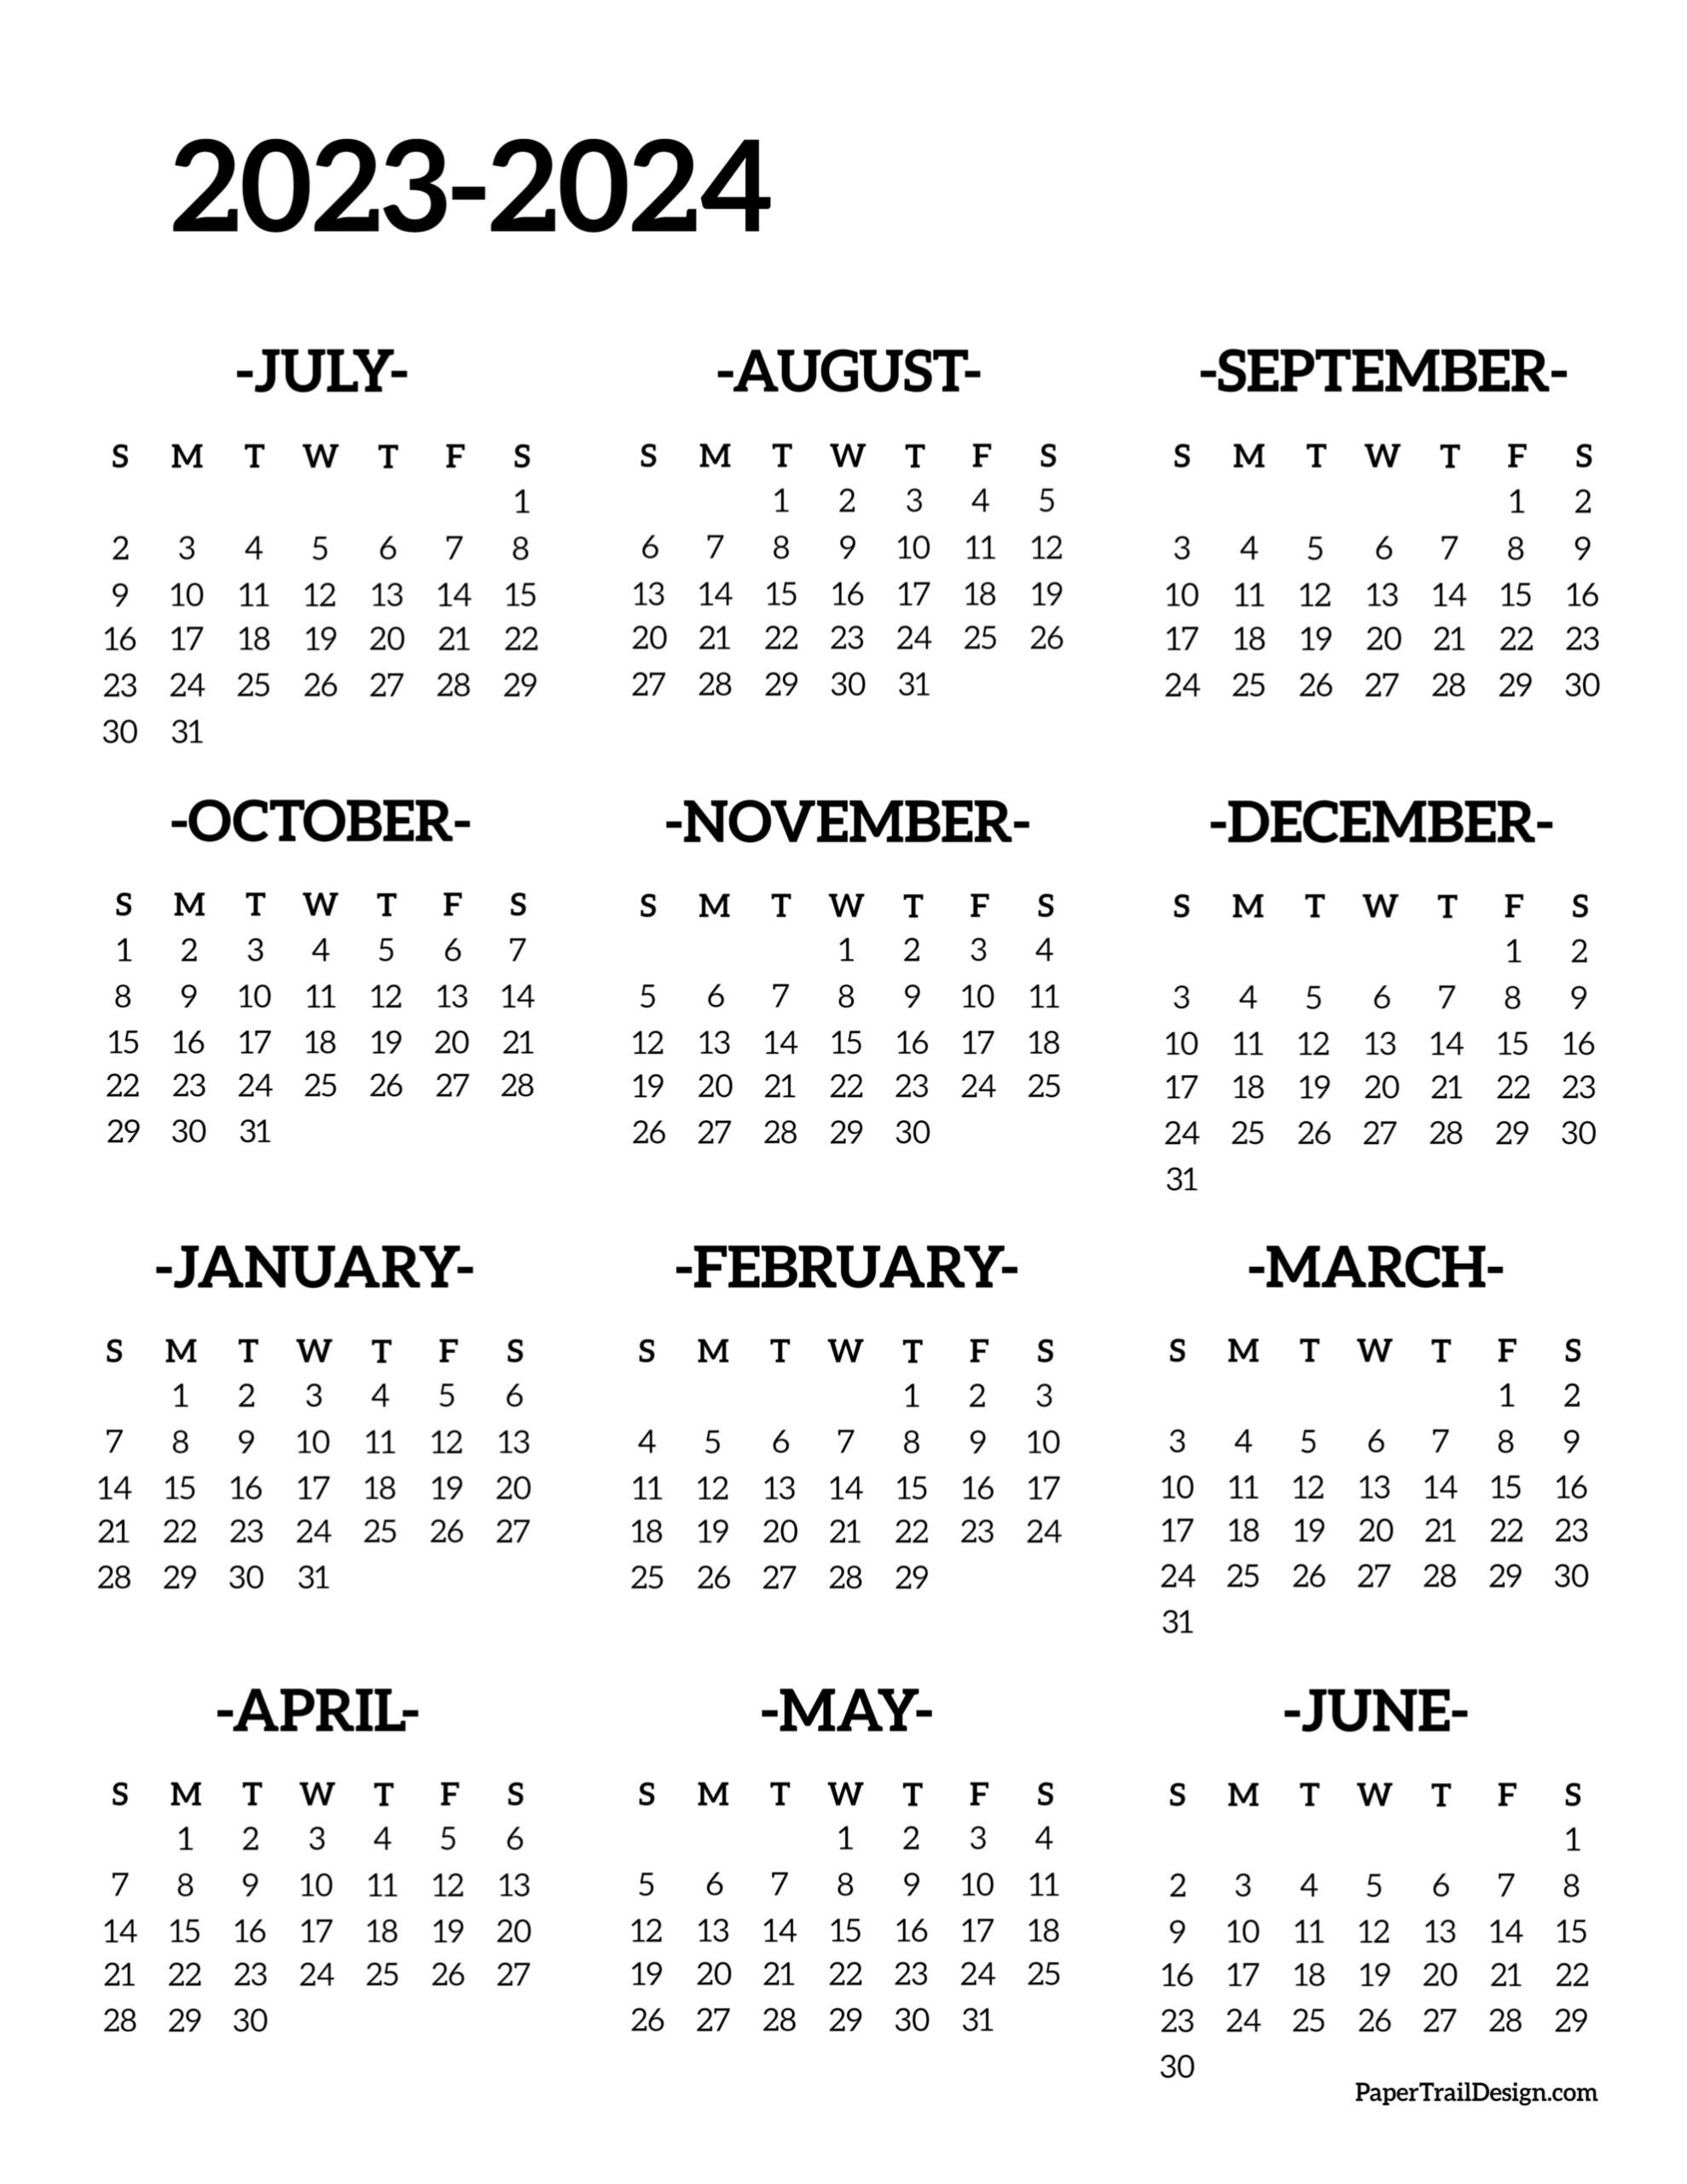 2023-2024 School Year Calendar Free Printable - Paper Trail Design for Printable Calendar 2023 2024